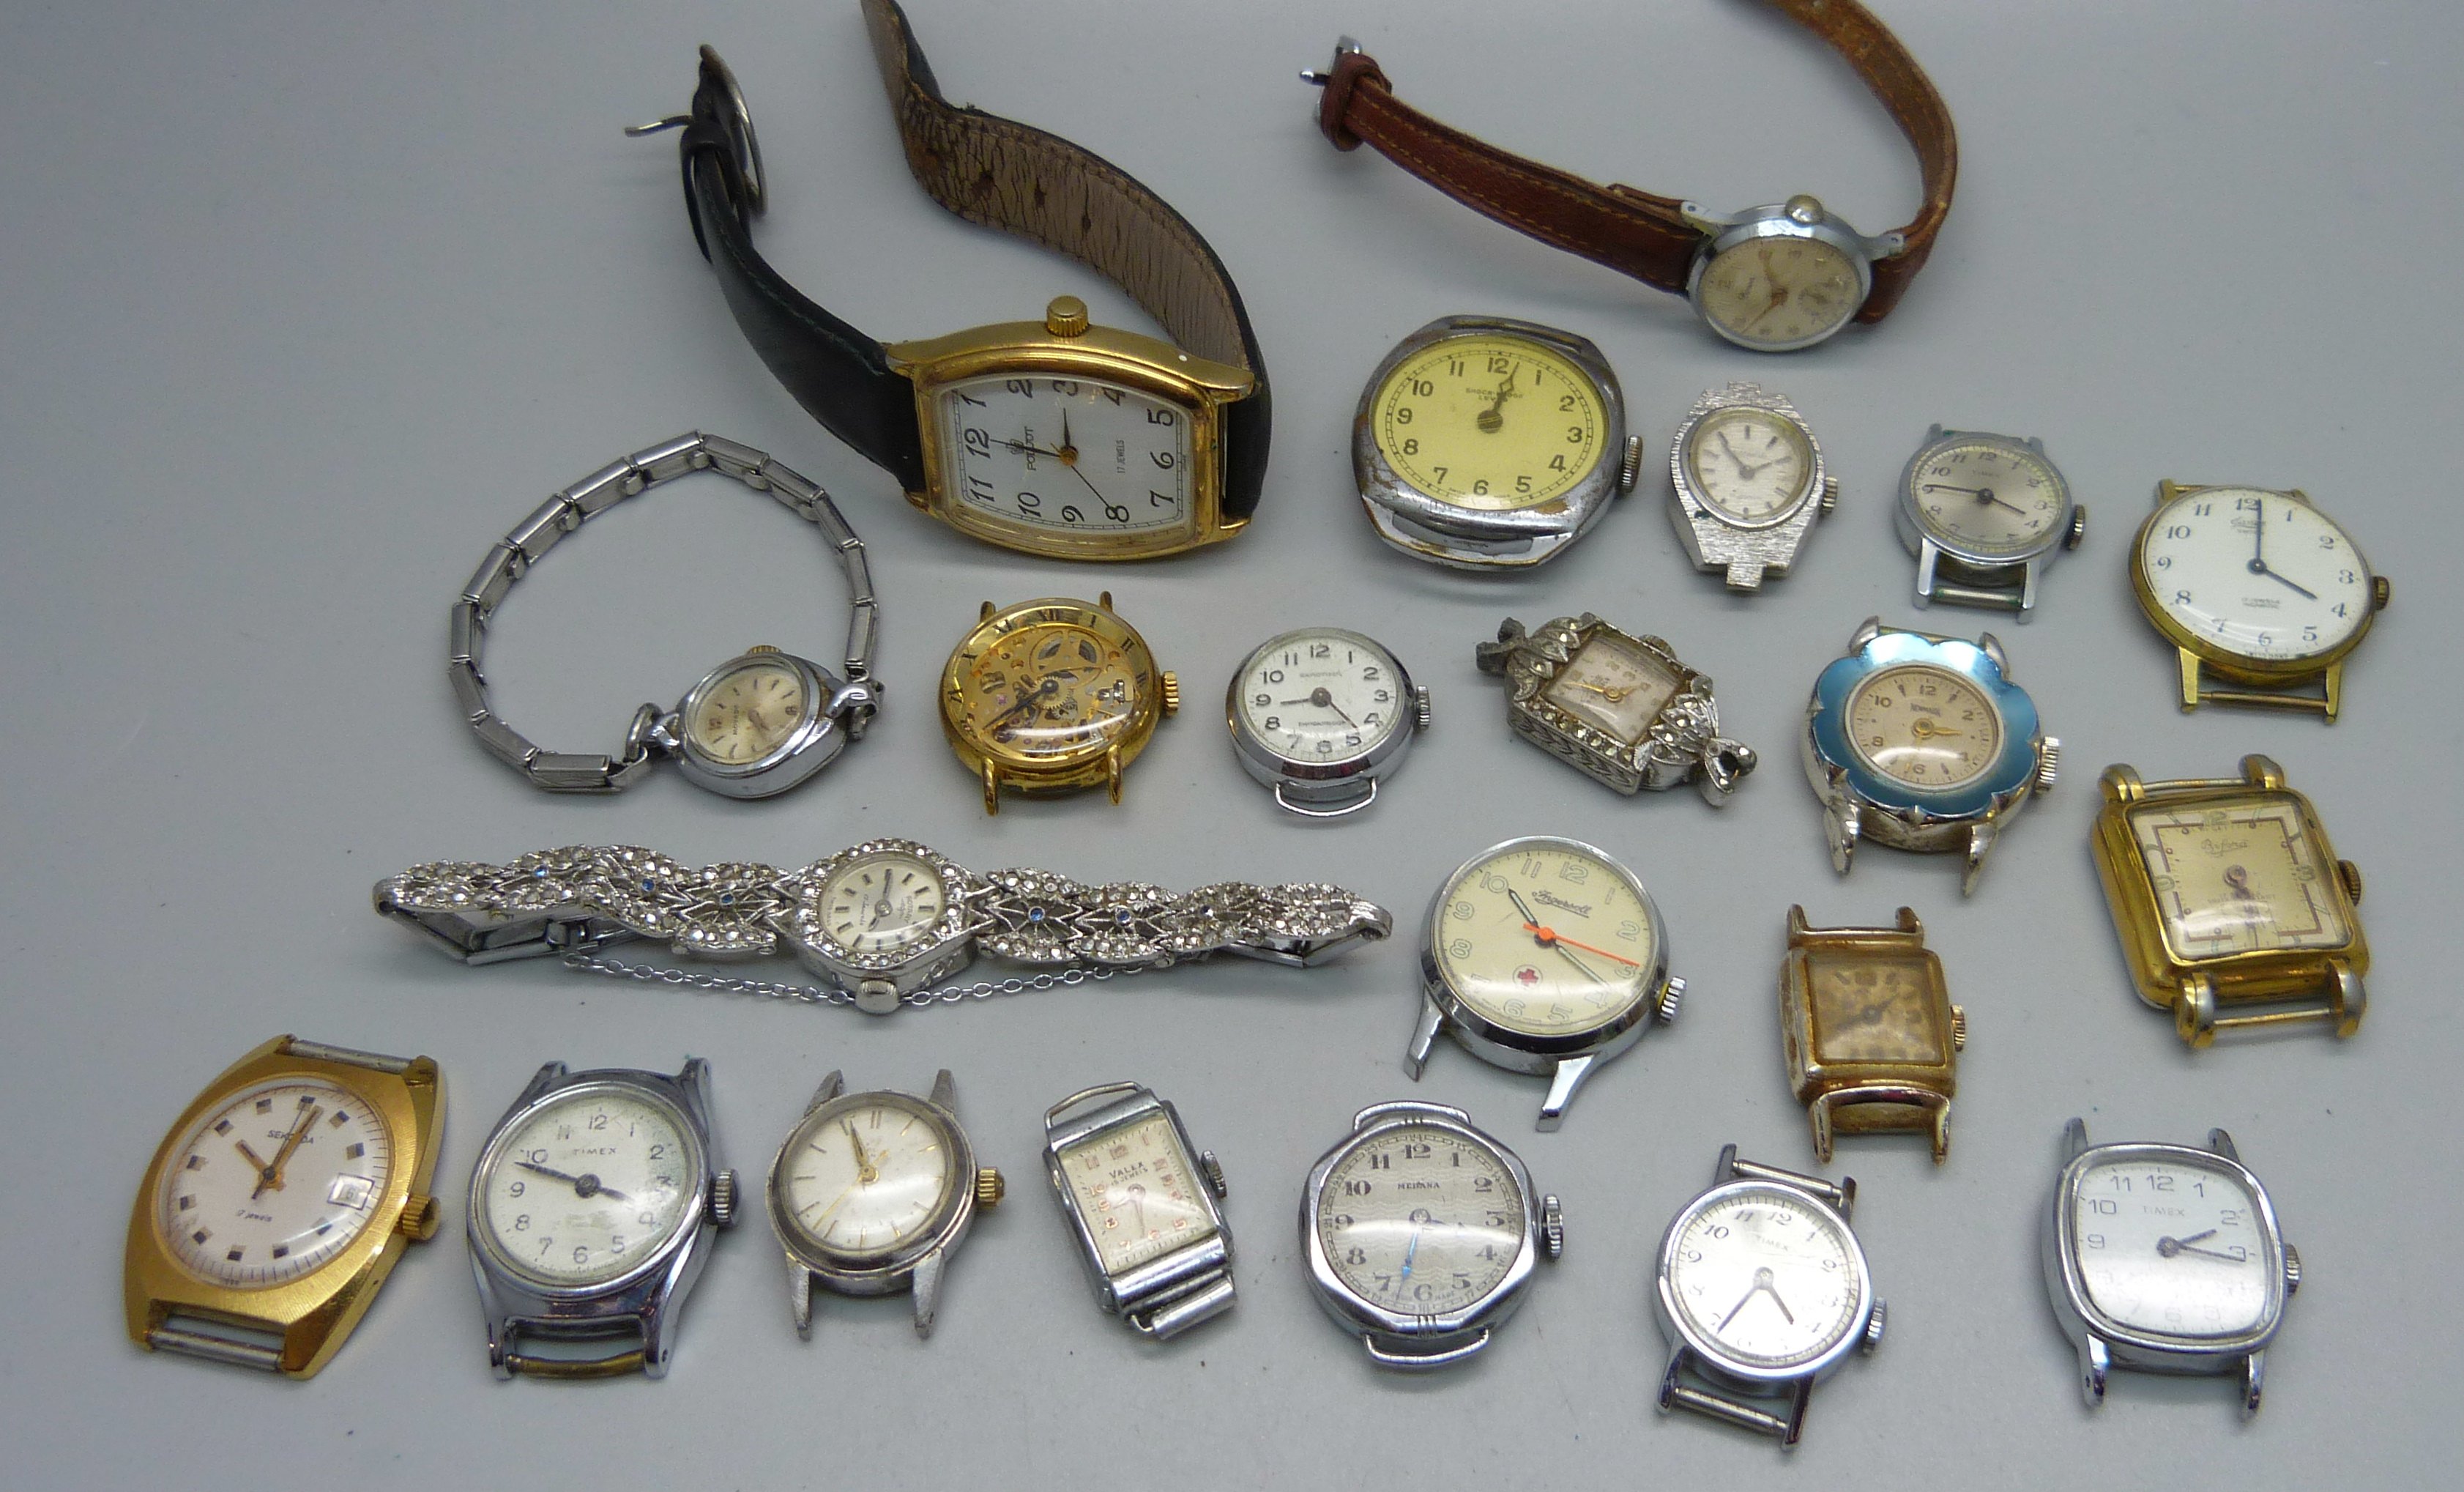 Lady's and gentleman's mechanical wristwatches including Poljot, Movado, Sekonda, Eternamatic, (